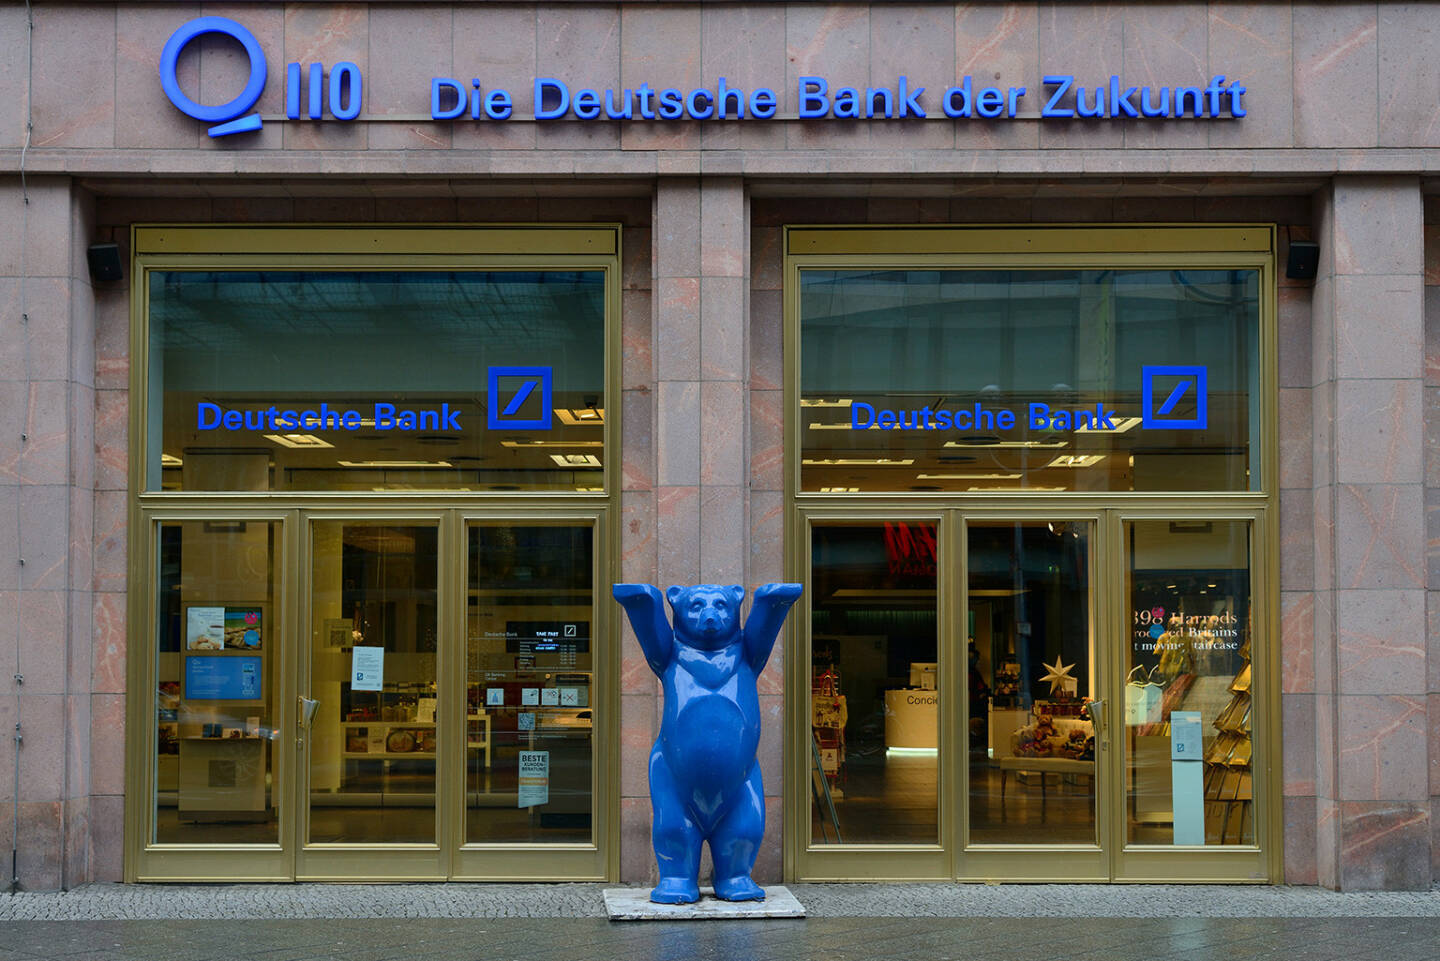 Deutsche Bank, Berlin, Die Deutsche Bank der Zukunft, blauer Bär <a href=http://www.shutterstock.com/gallery-586741p1.html?cr=00&pl=edit-00>astudio</a> / <a href=http://www.shutterstock.com/editorial?cr=00&pl=edit-00>Shutterstock.com</a>